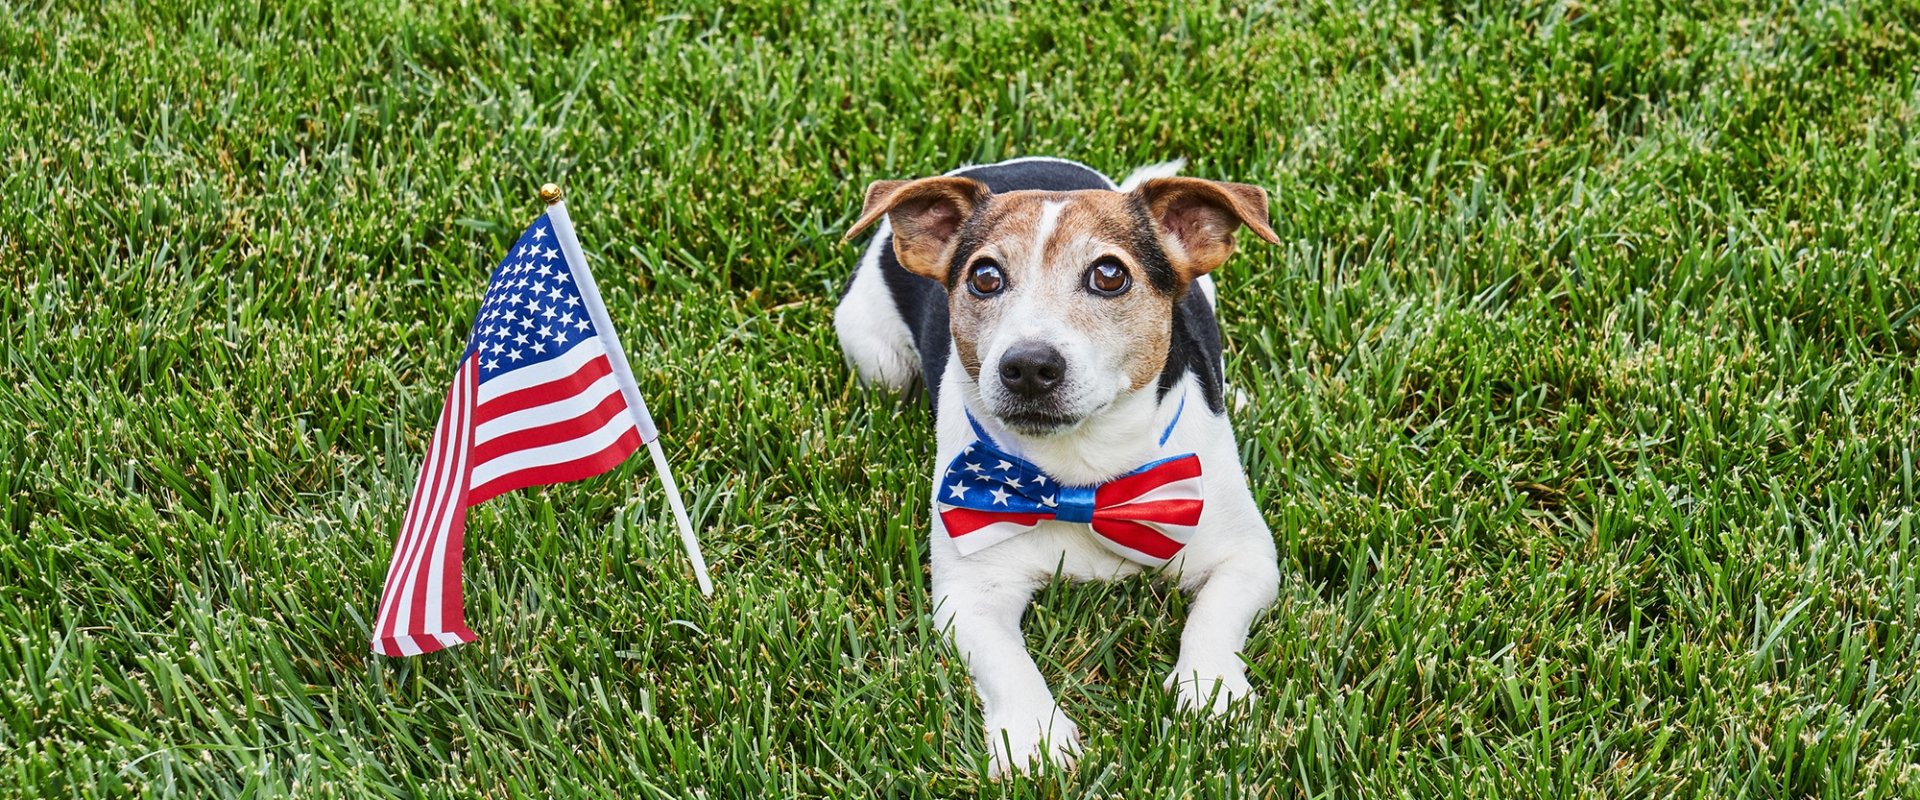 Dog with US flag